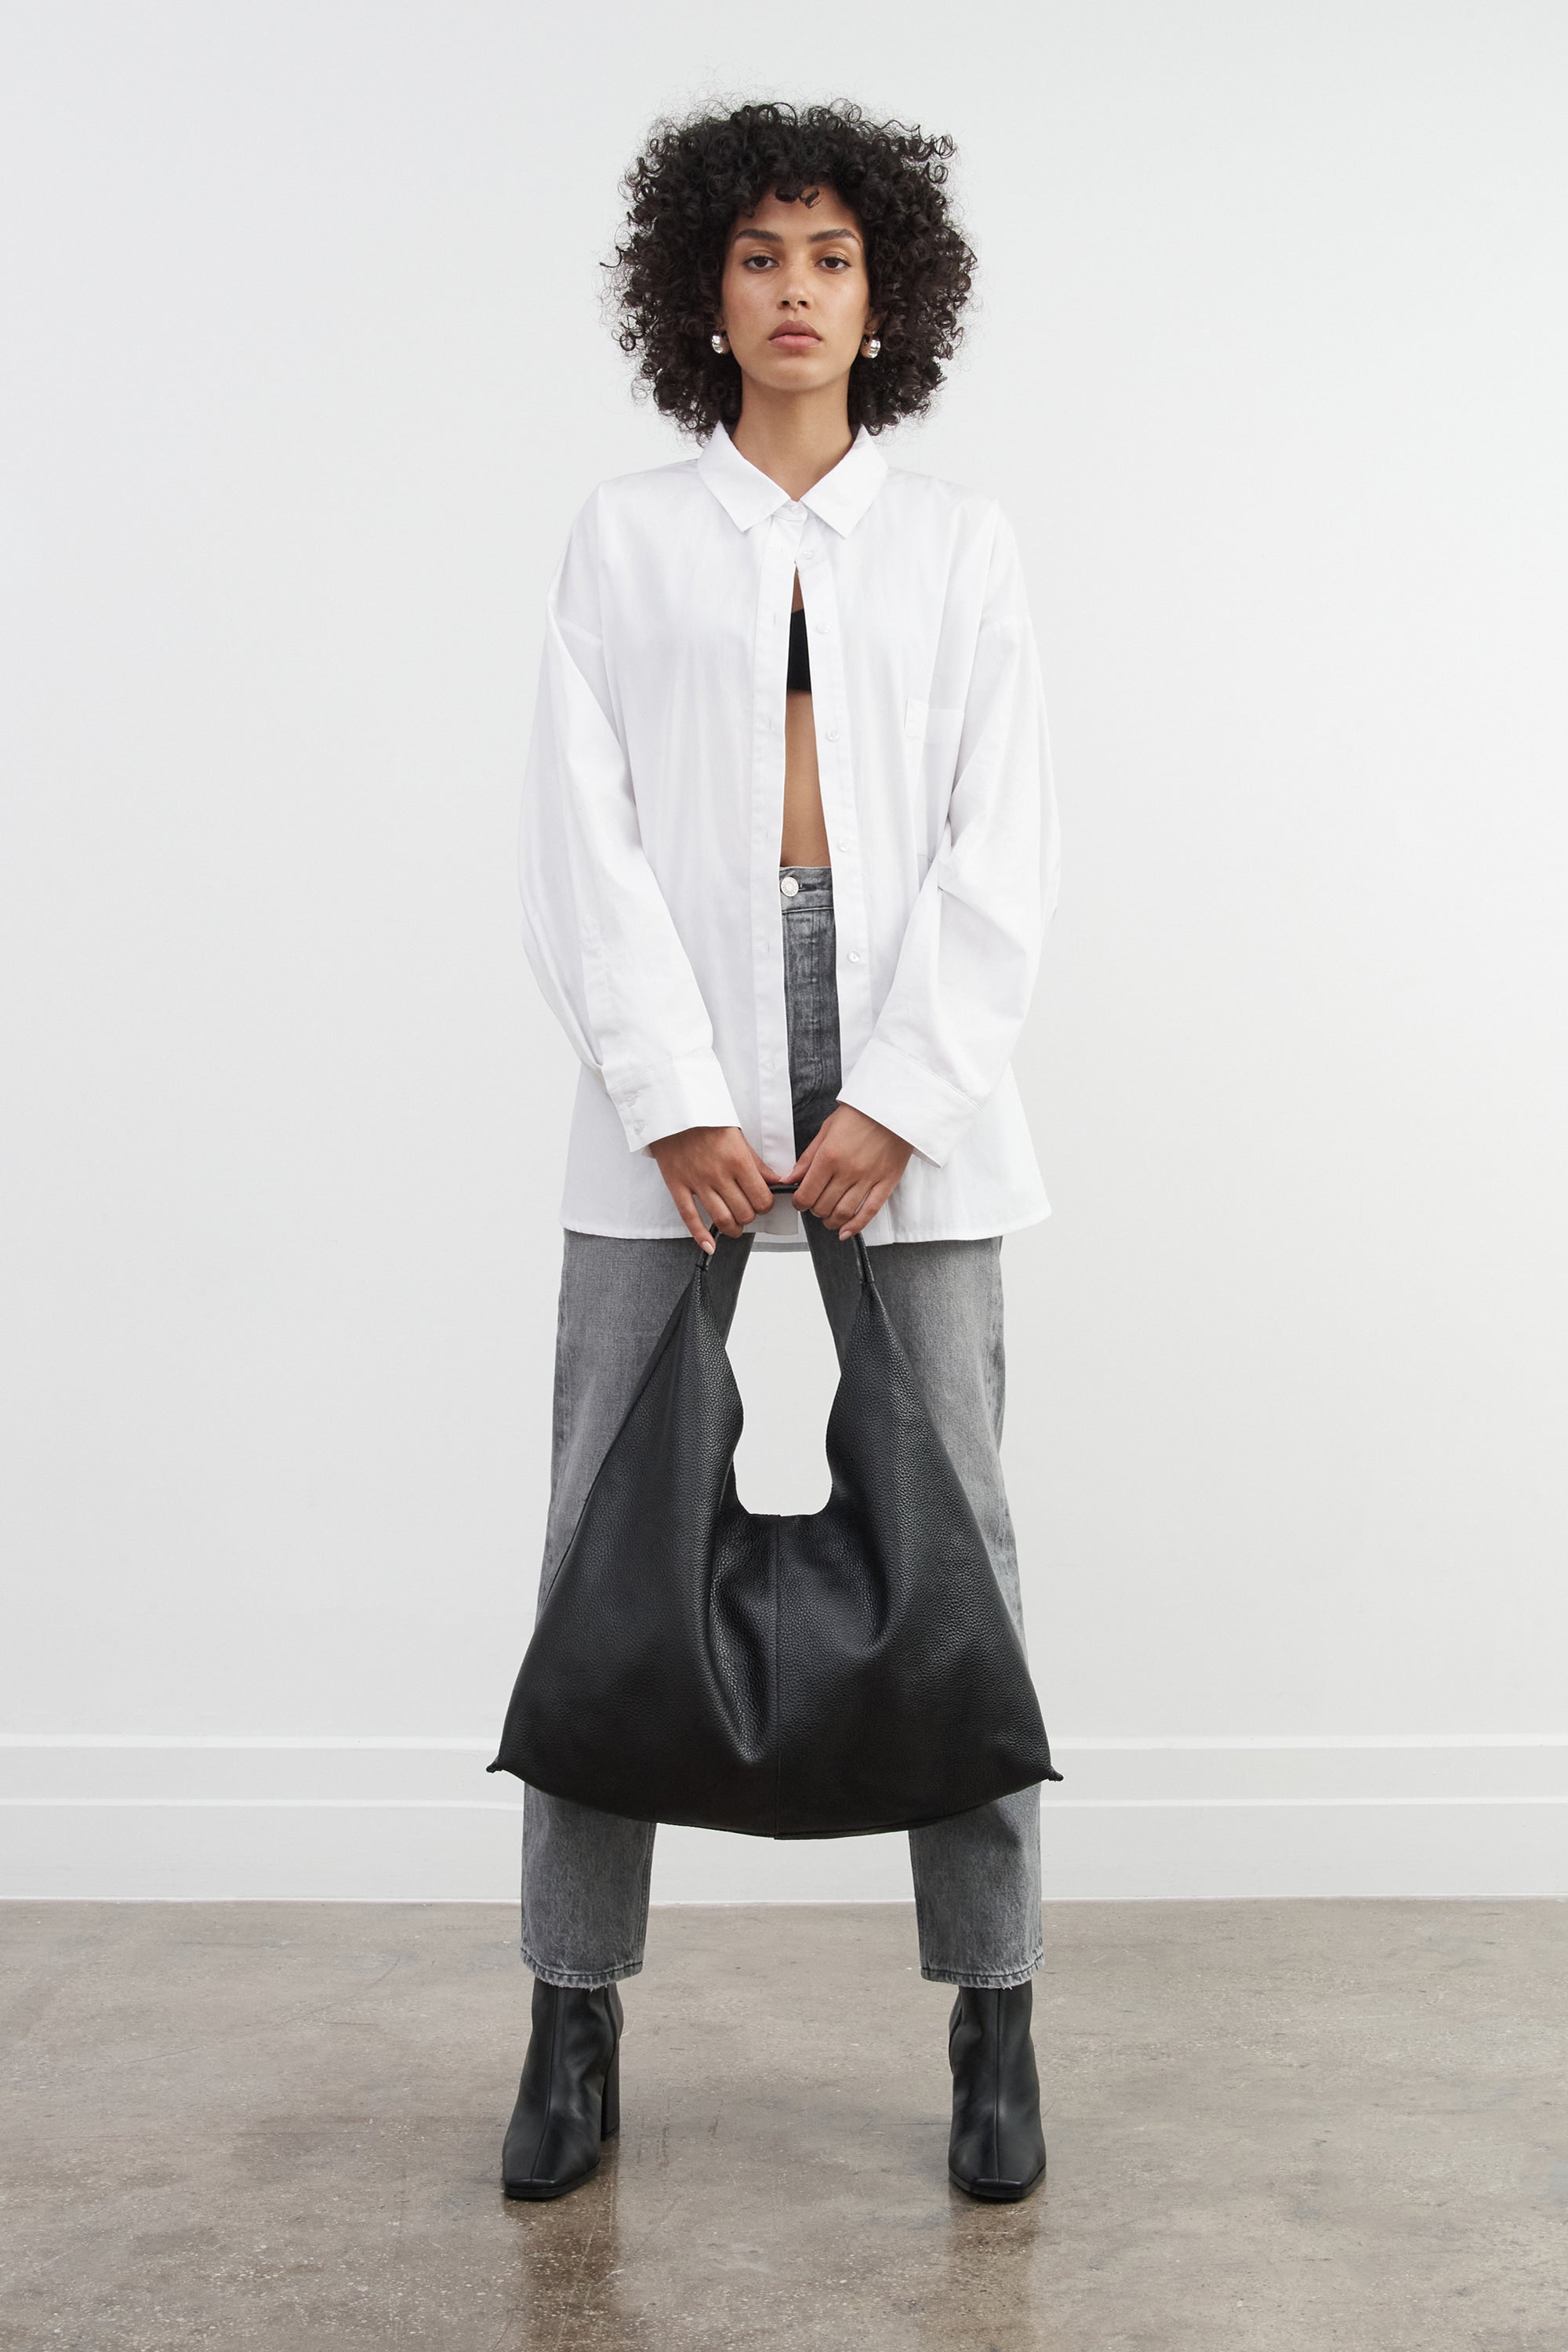 Oversized Black Triangle Tote Bag - Kelly Tote | Marcella